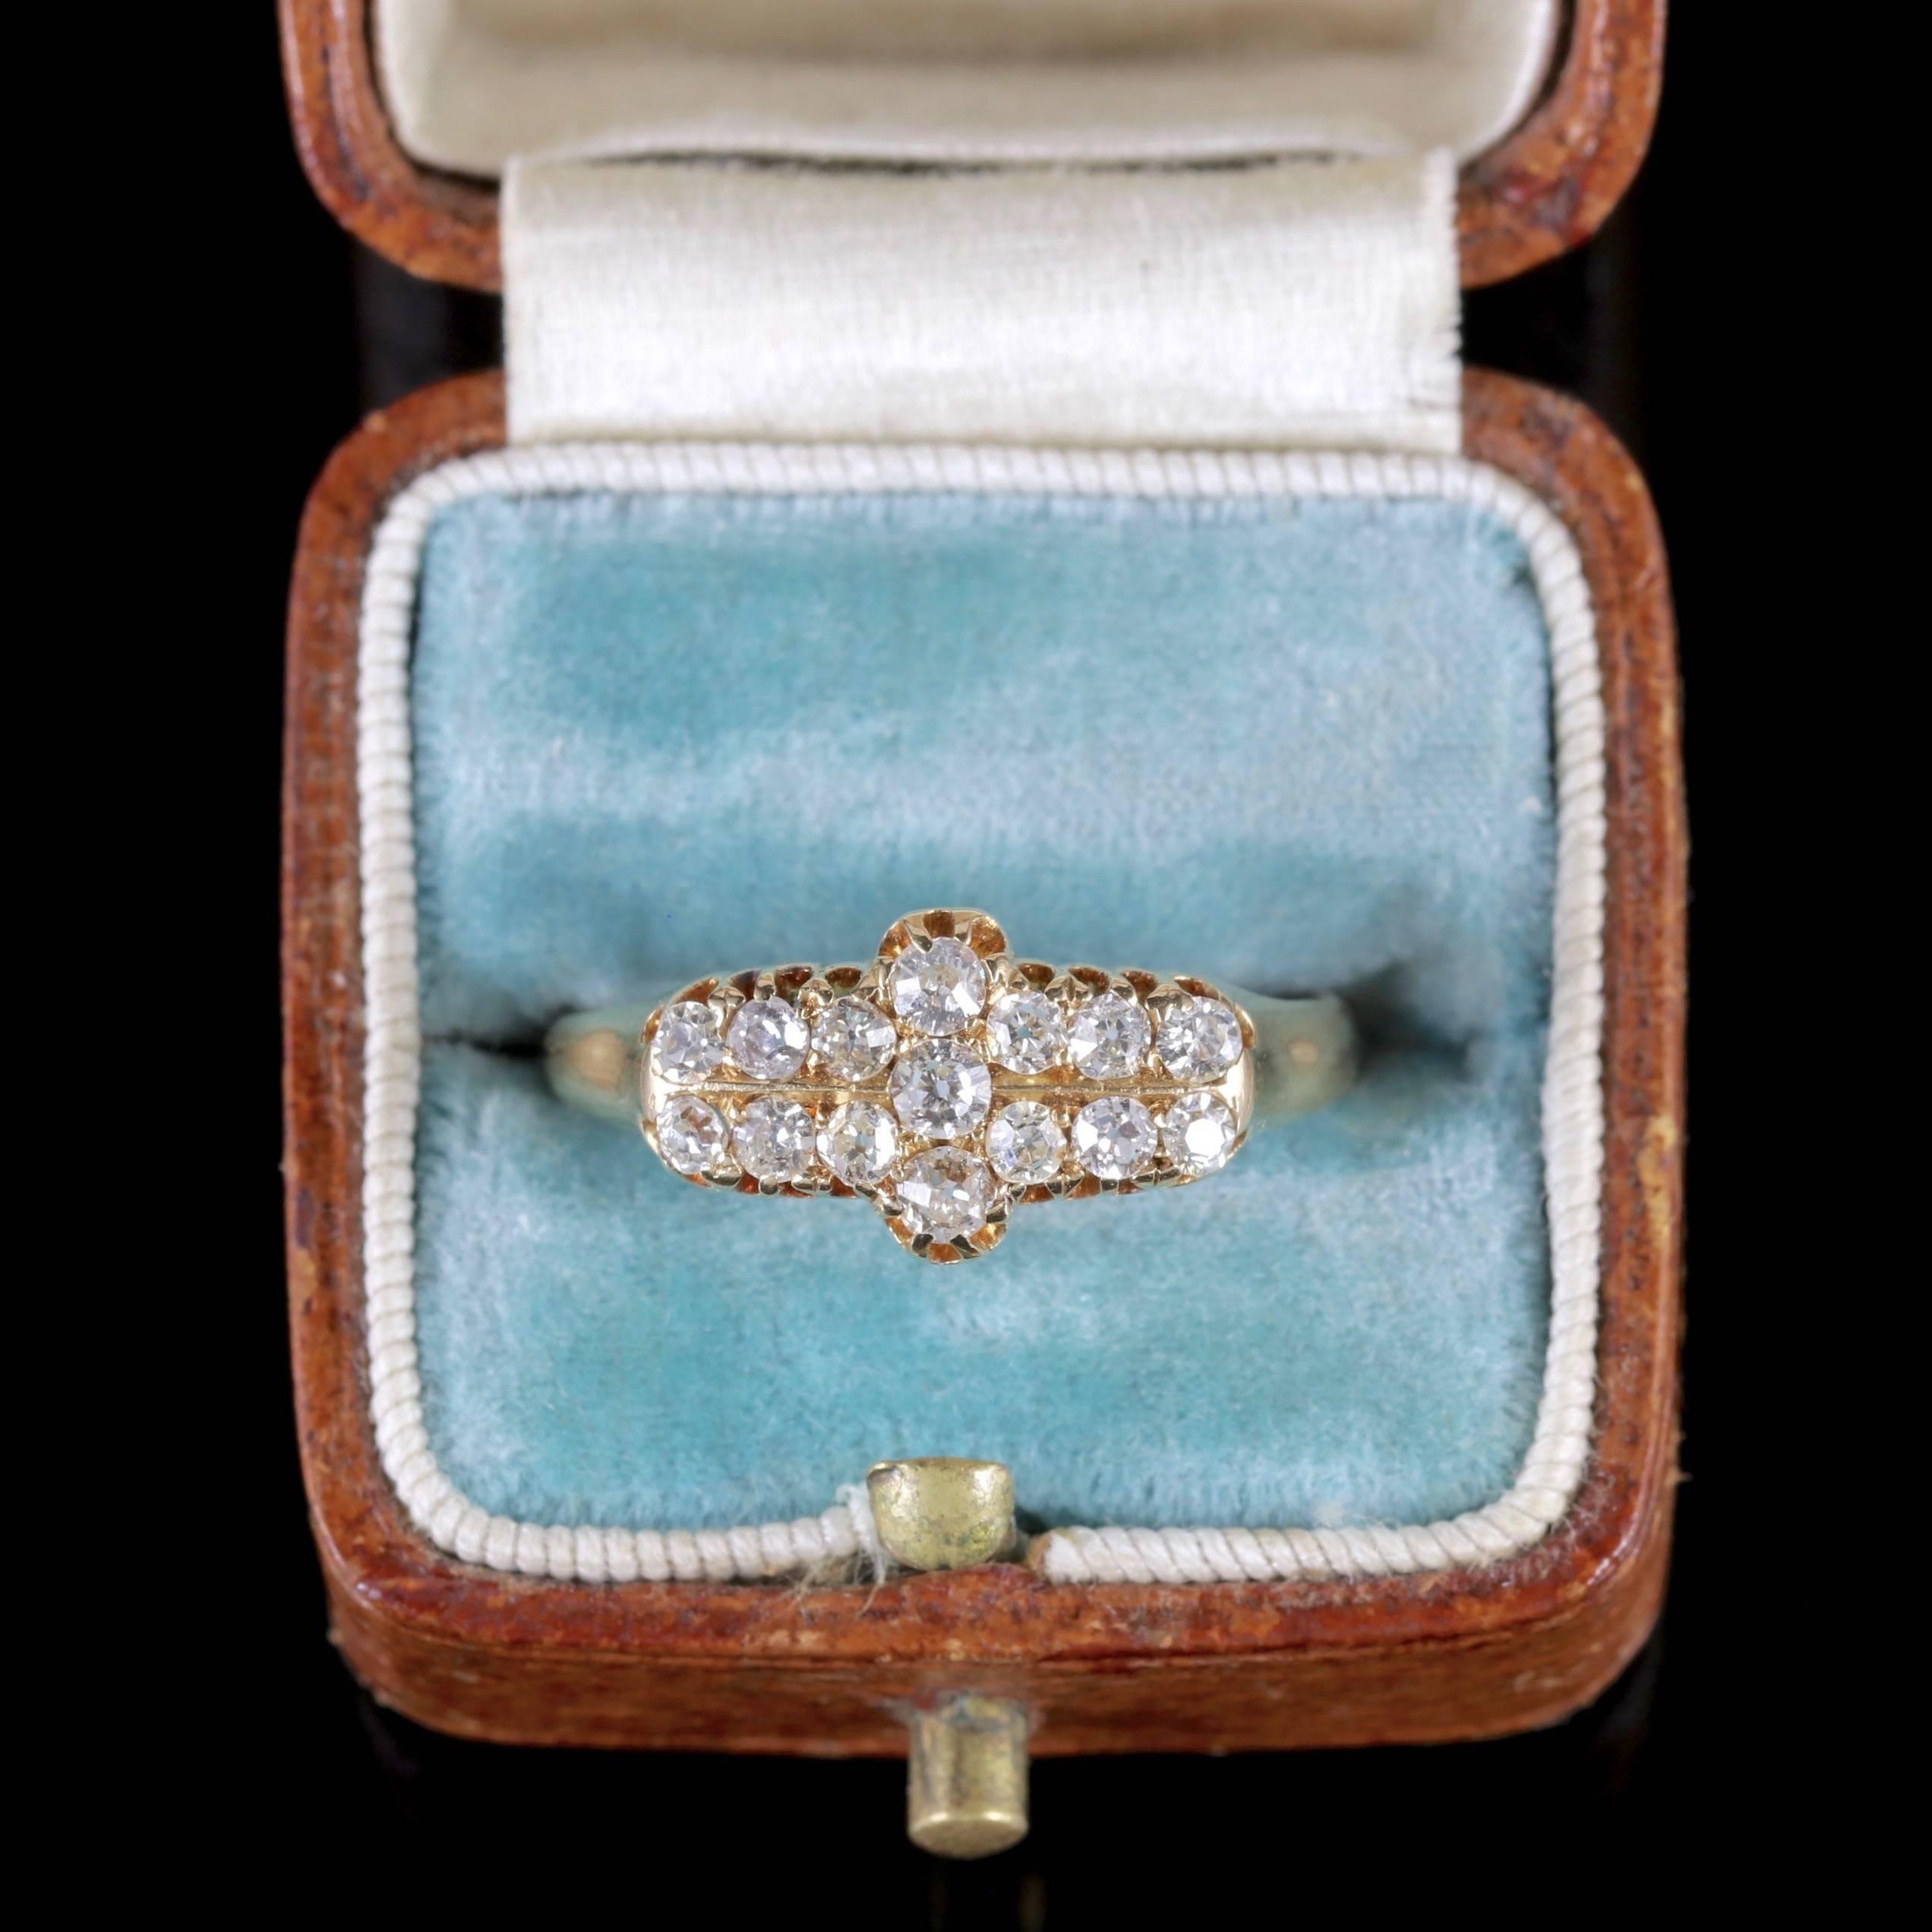 Antique Edwardian Diamond Ring Chester, 1910 3